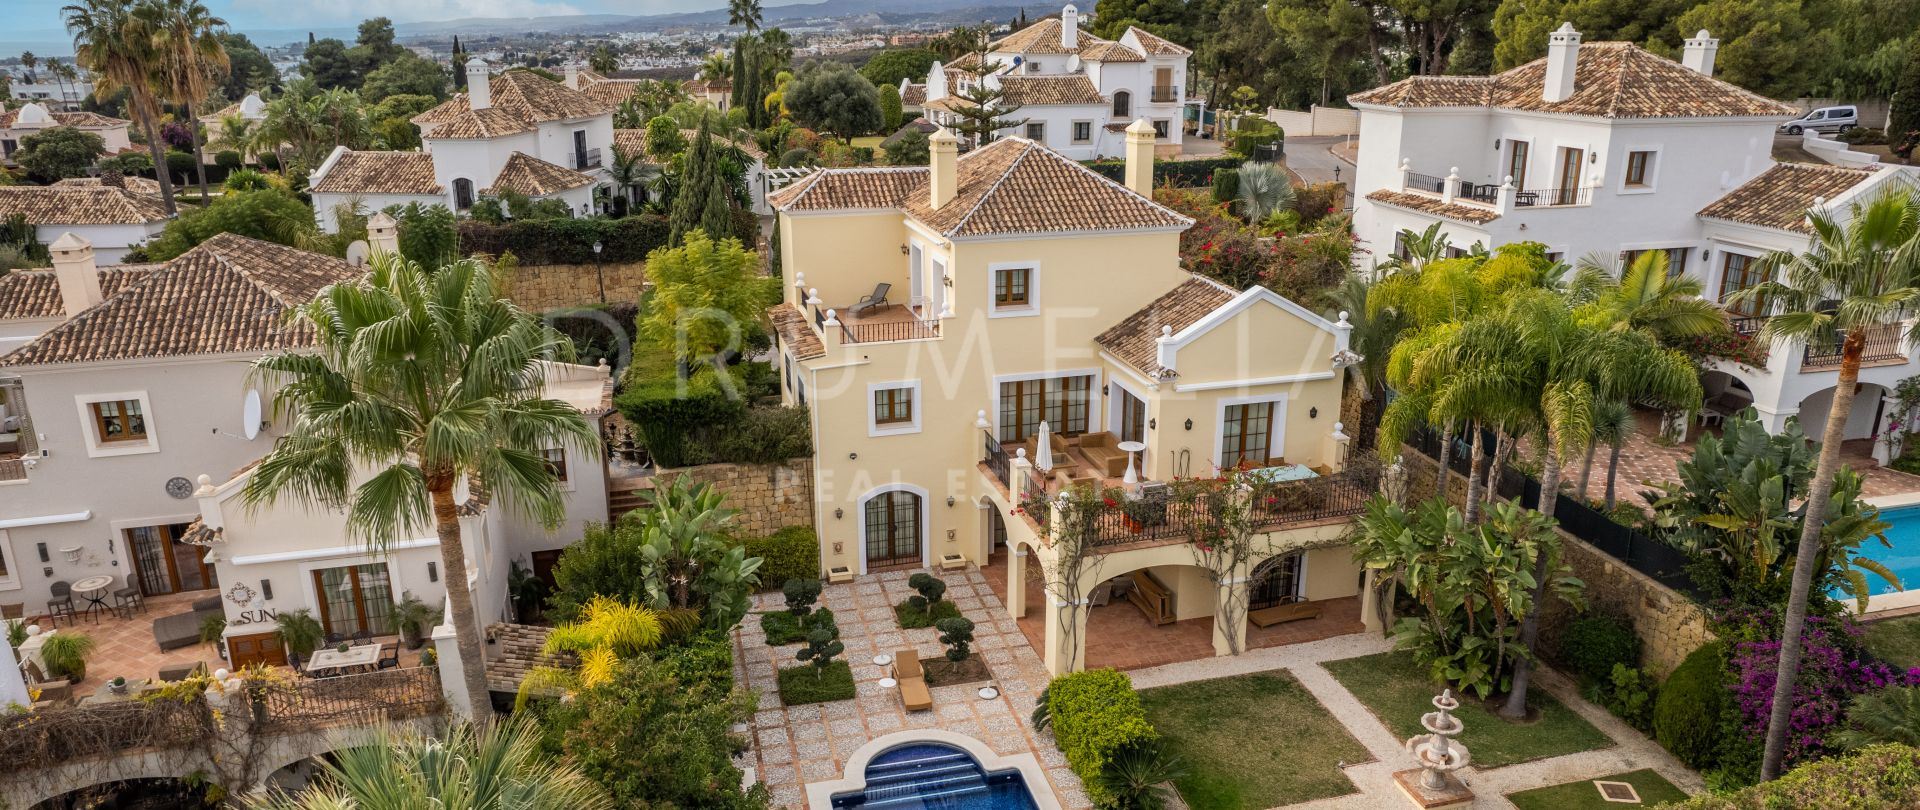 Exquisite Villa with Panoramic Sea Views in prime location, El Paraiso Medio